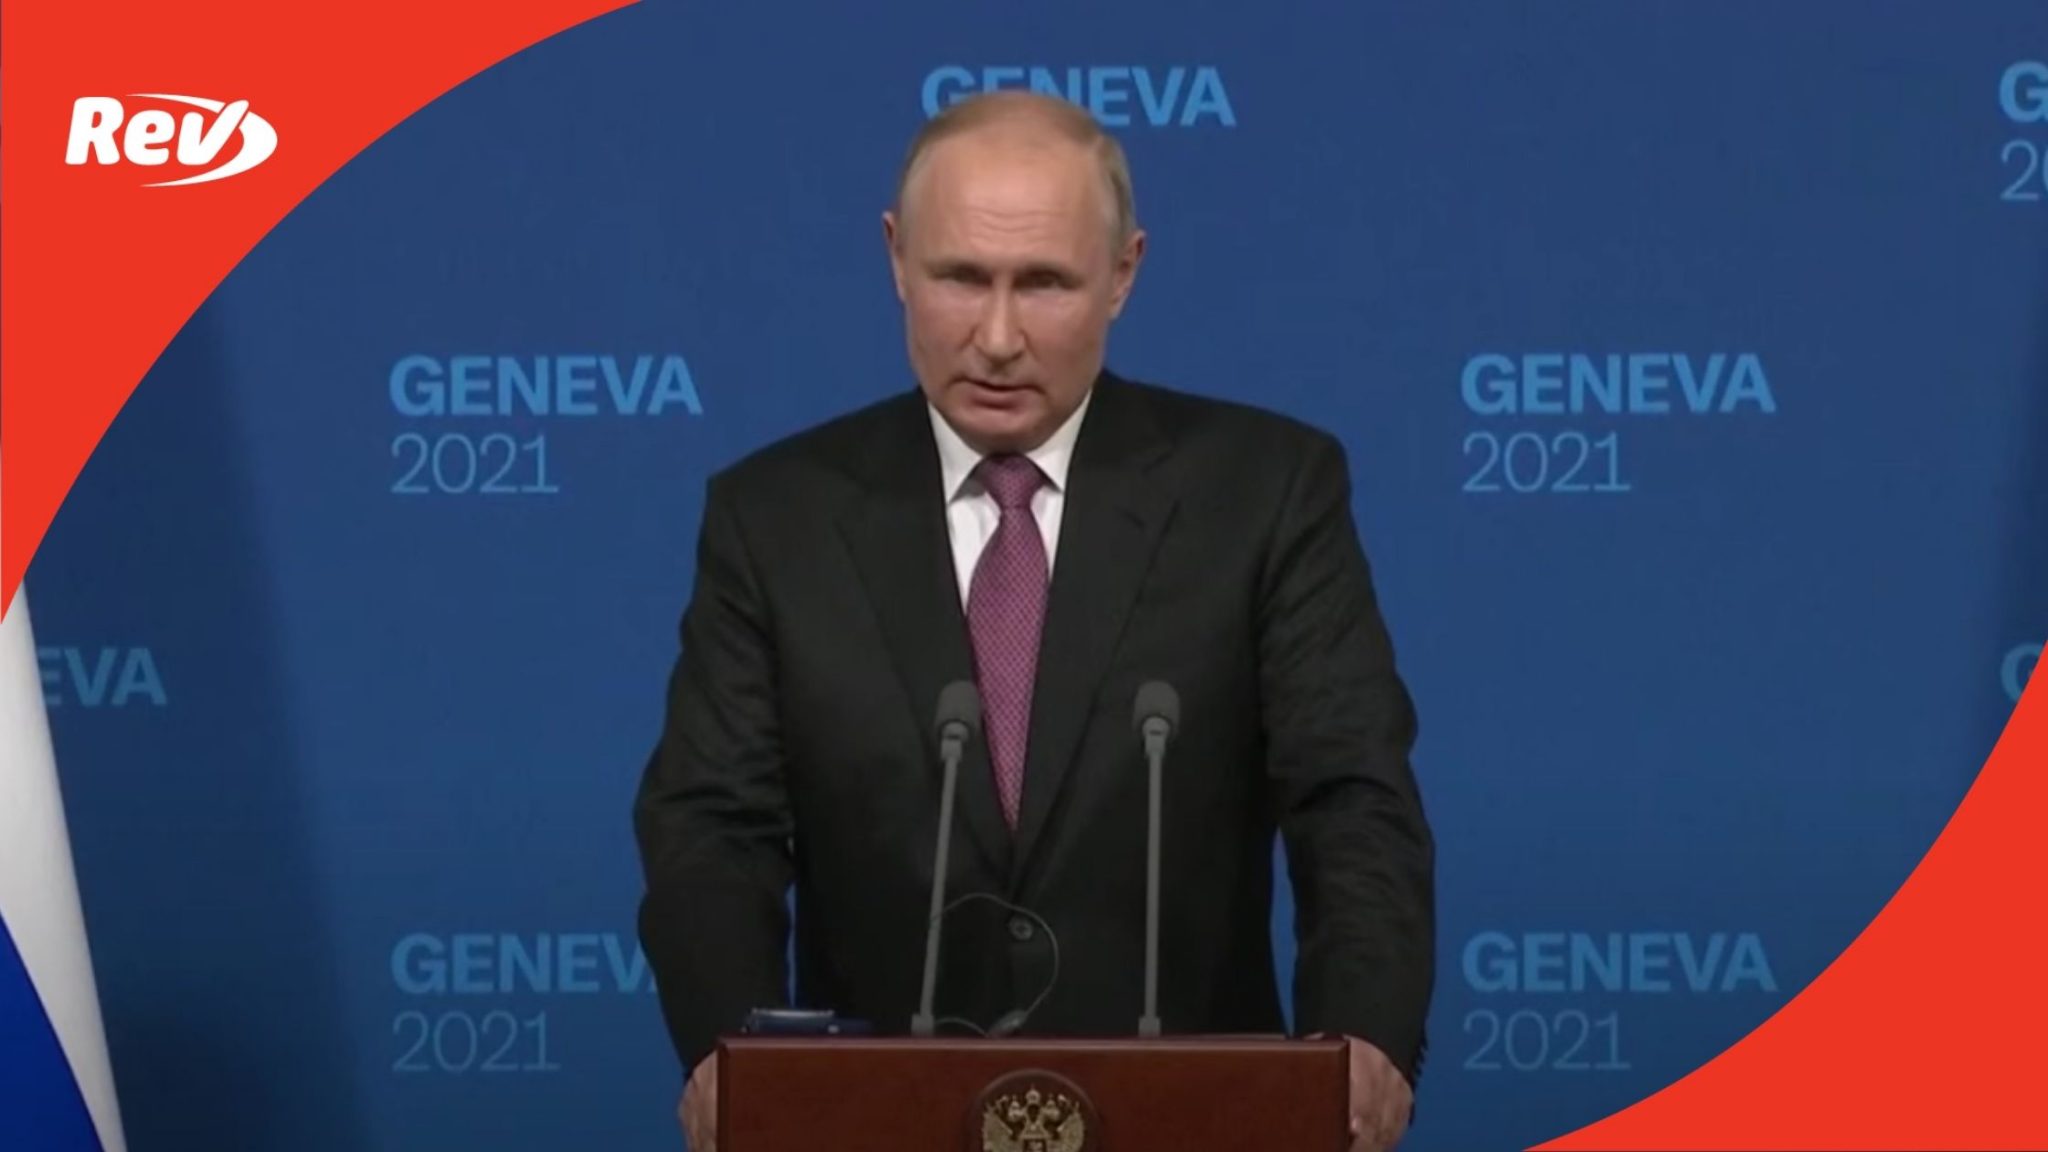 Russian President Vladimir Putin Press Conference Transcript After Meeting With Biden